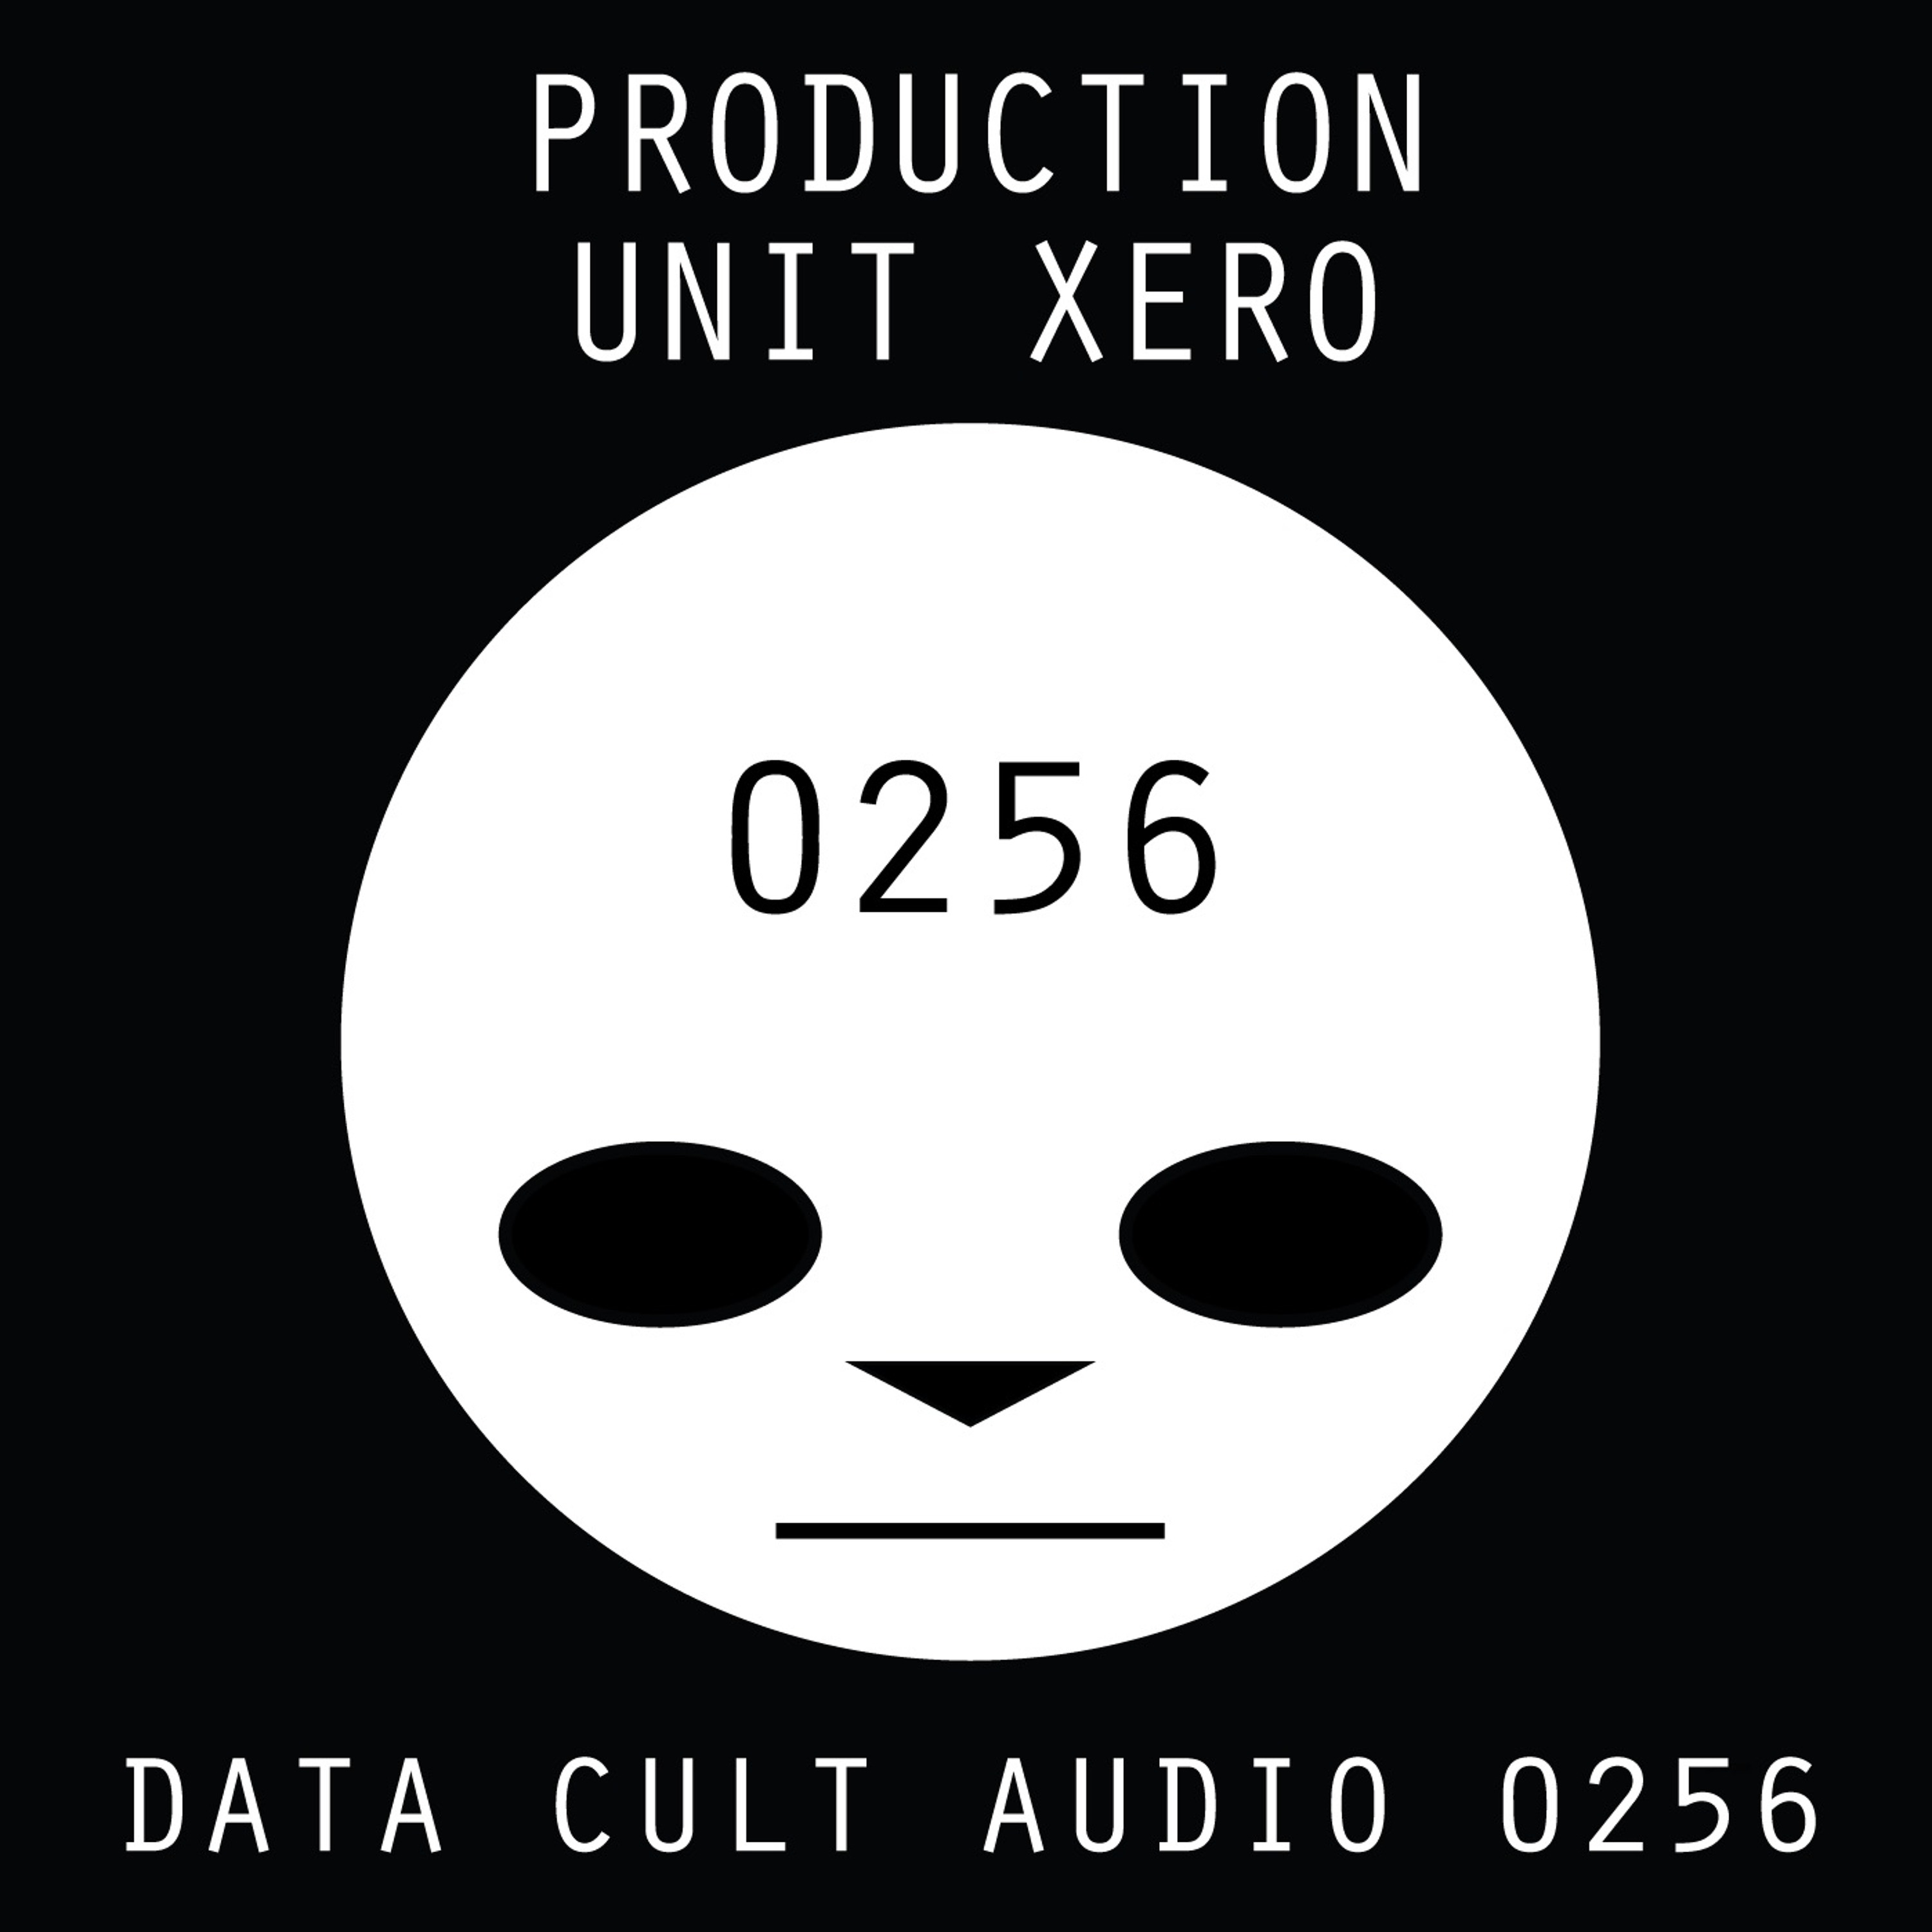 Data Cult Audio 0256 - Production Unit Xero